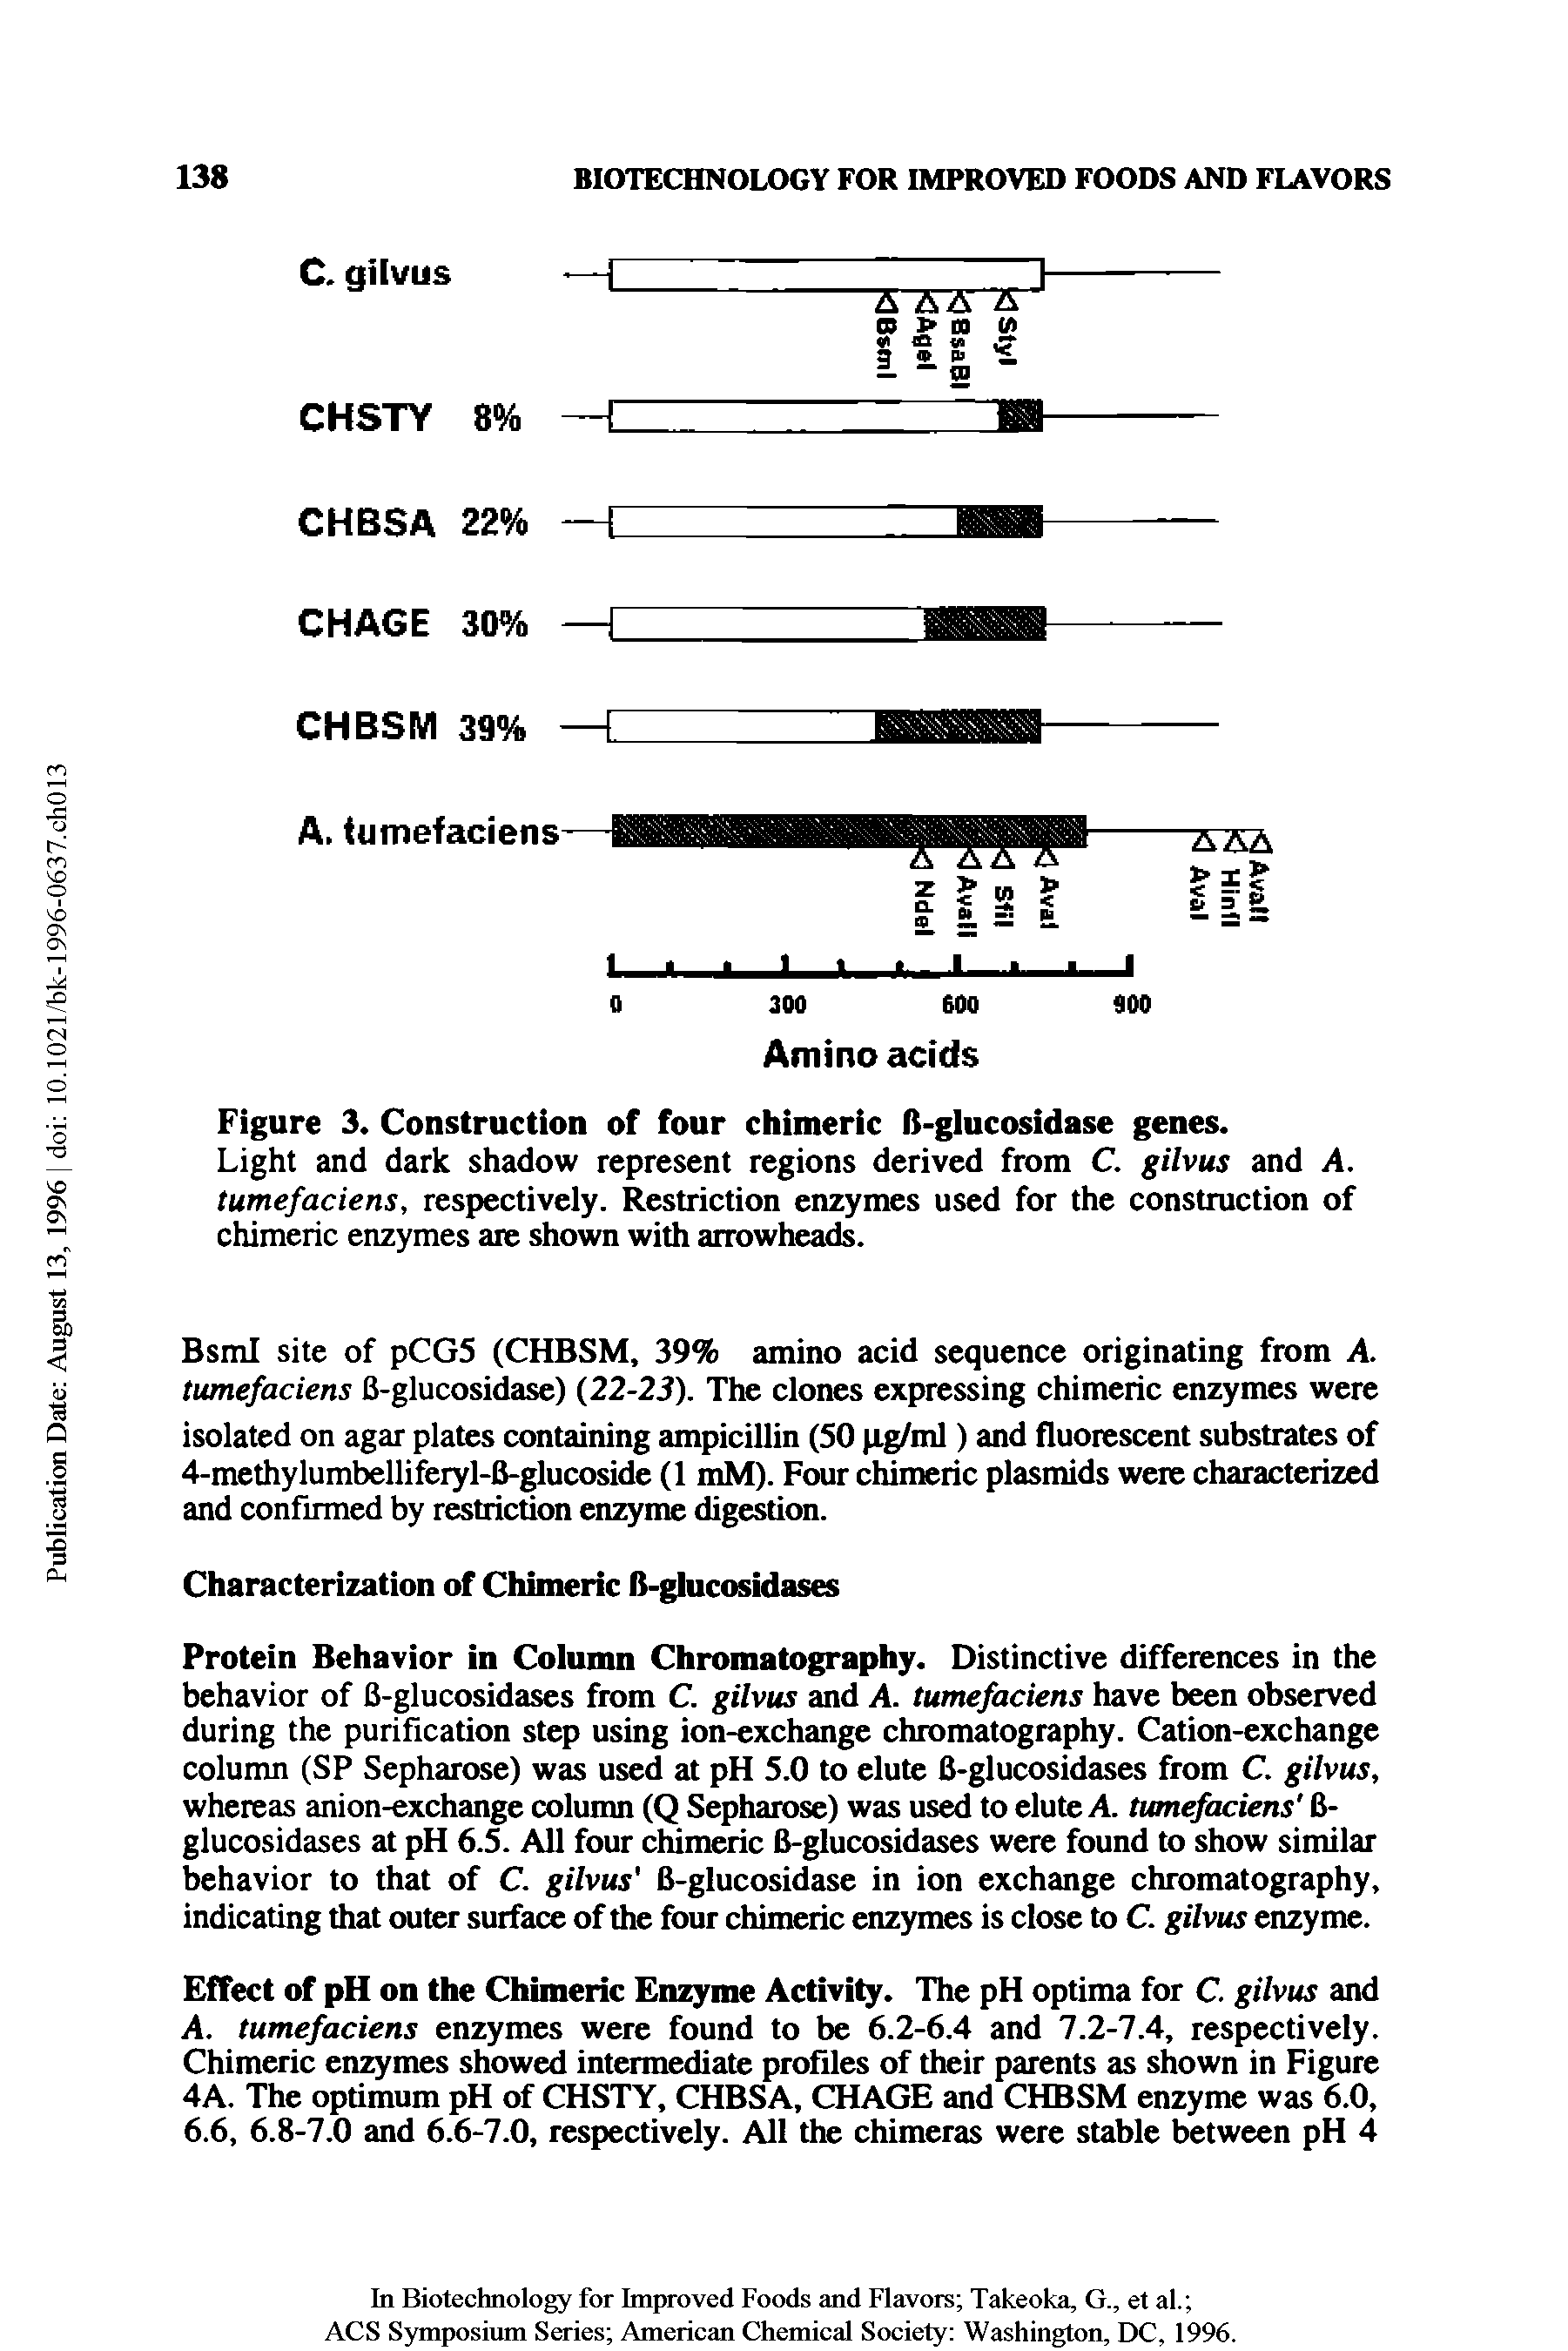 Figure 3. Construction of four chimeric fi-glucosidase genes.